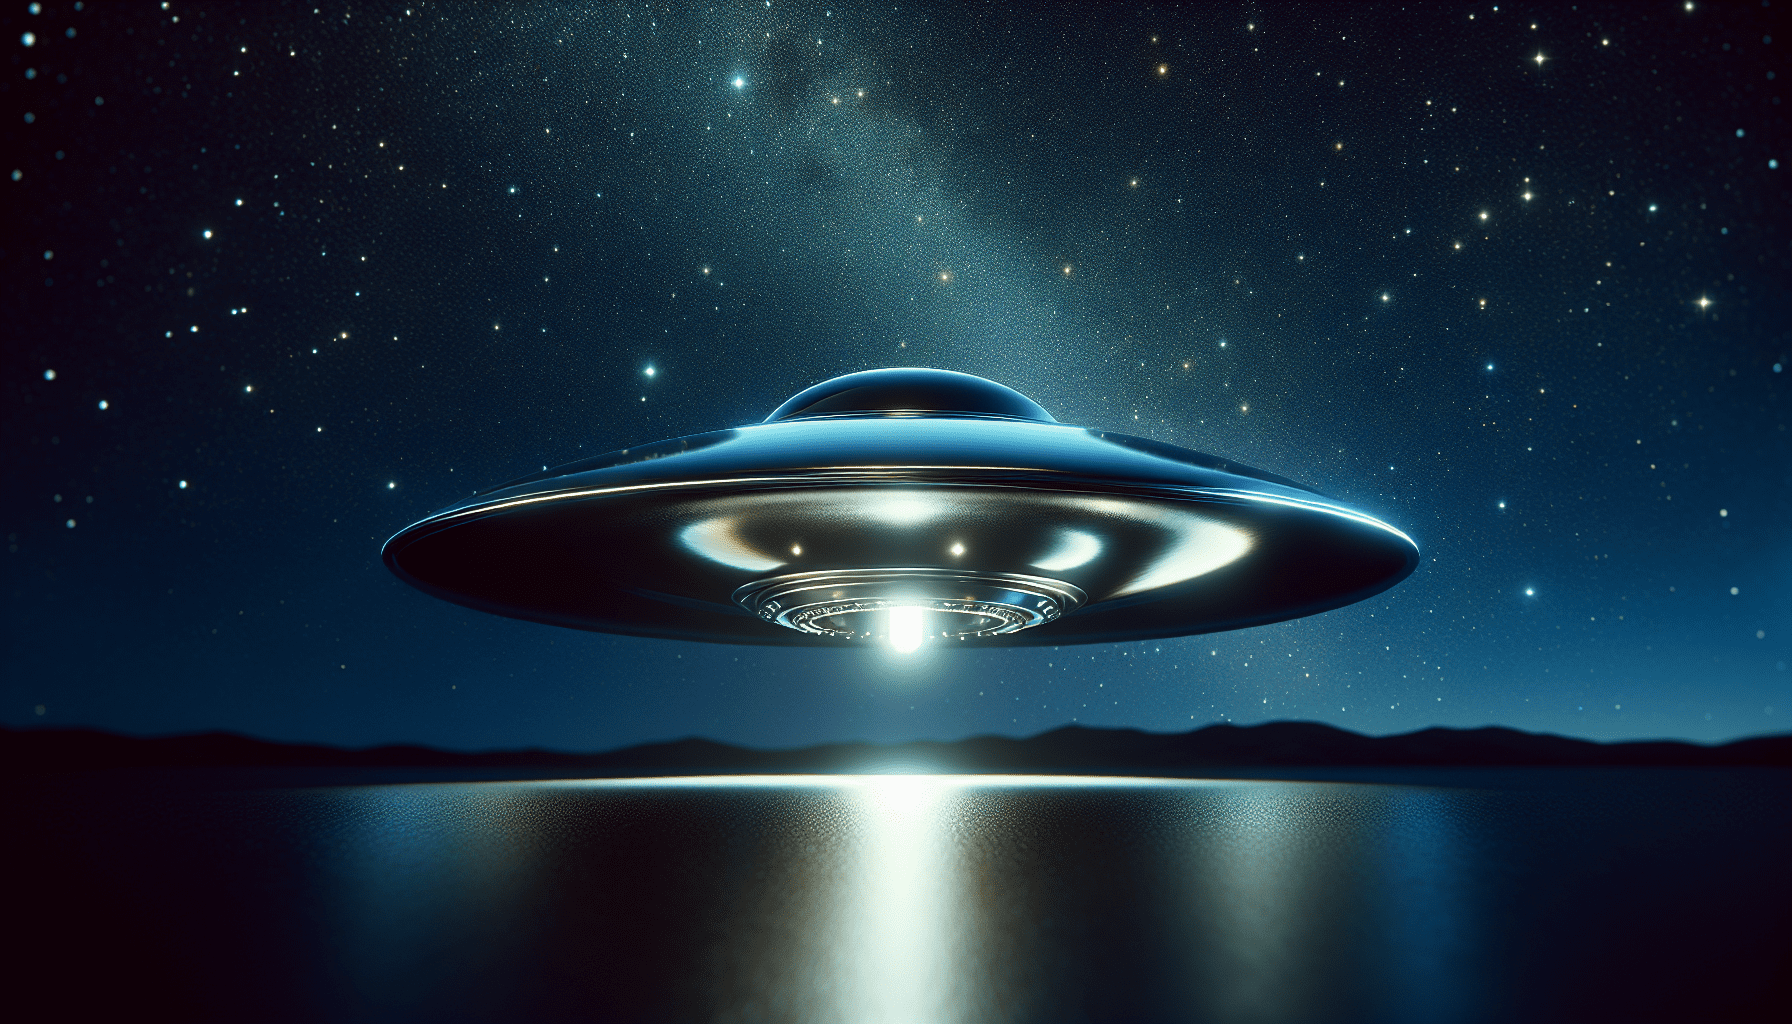 How To Analyze And Explain UFO Phenomenon Scientifically